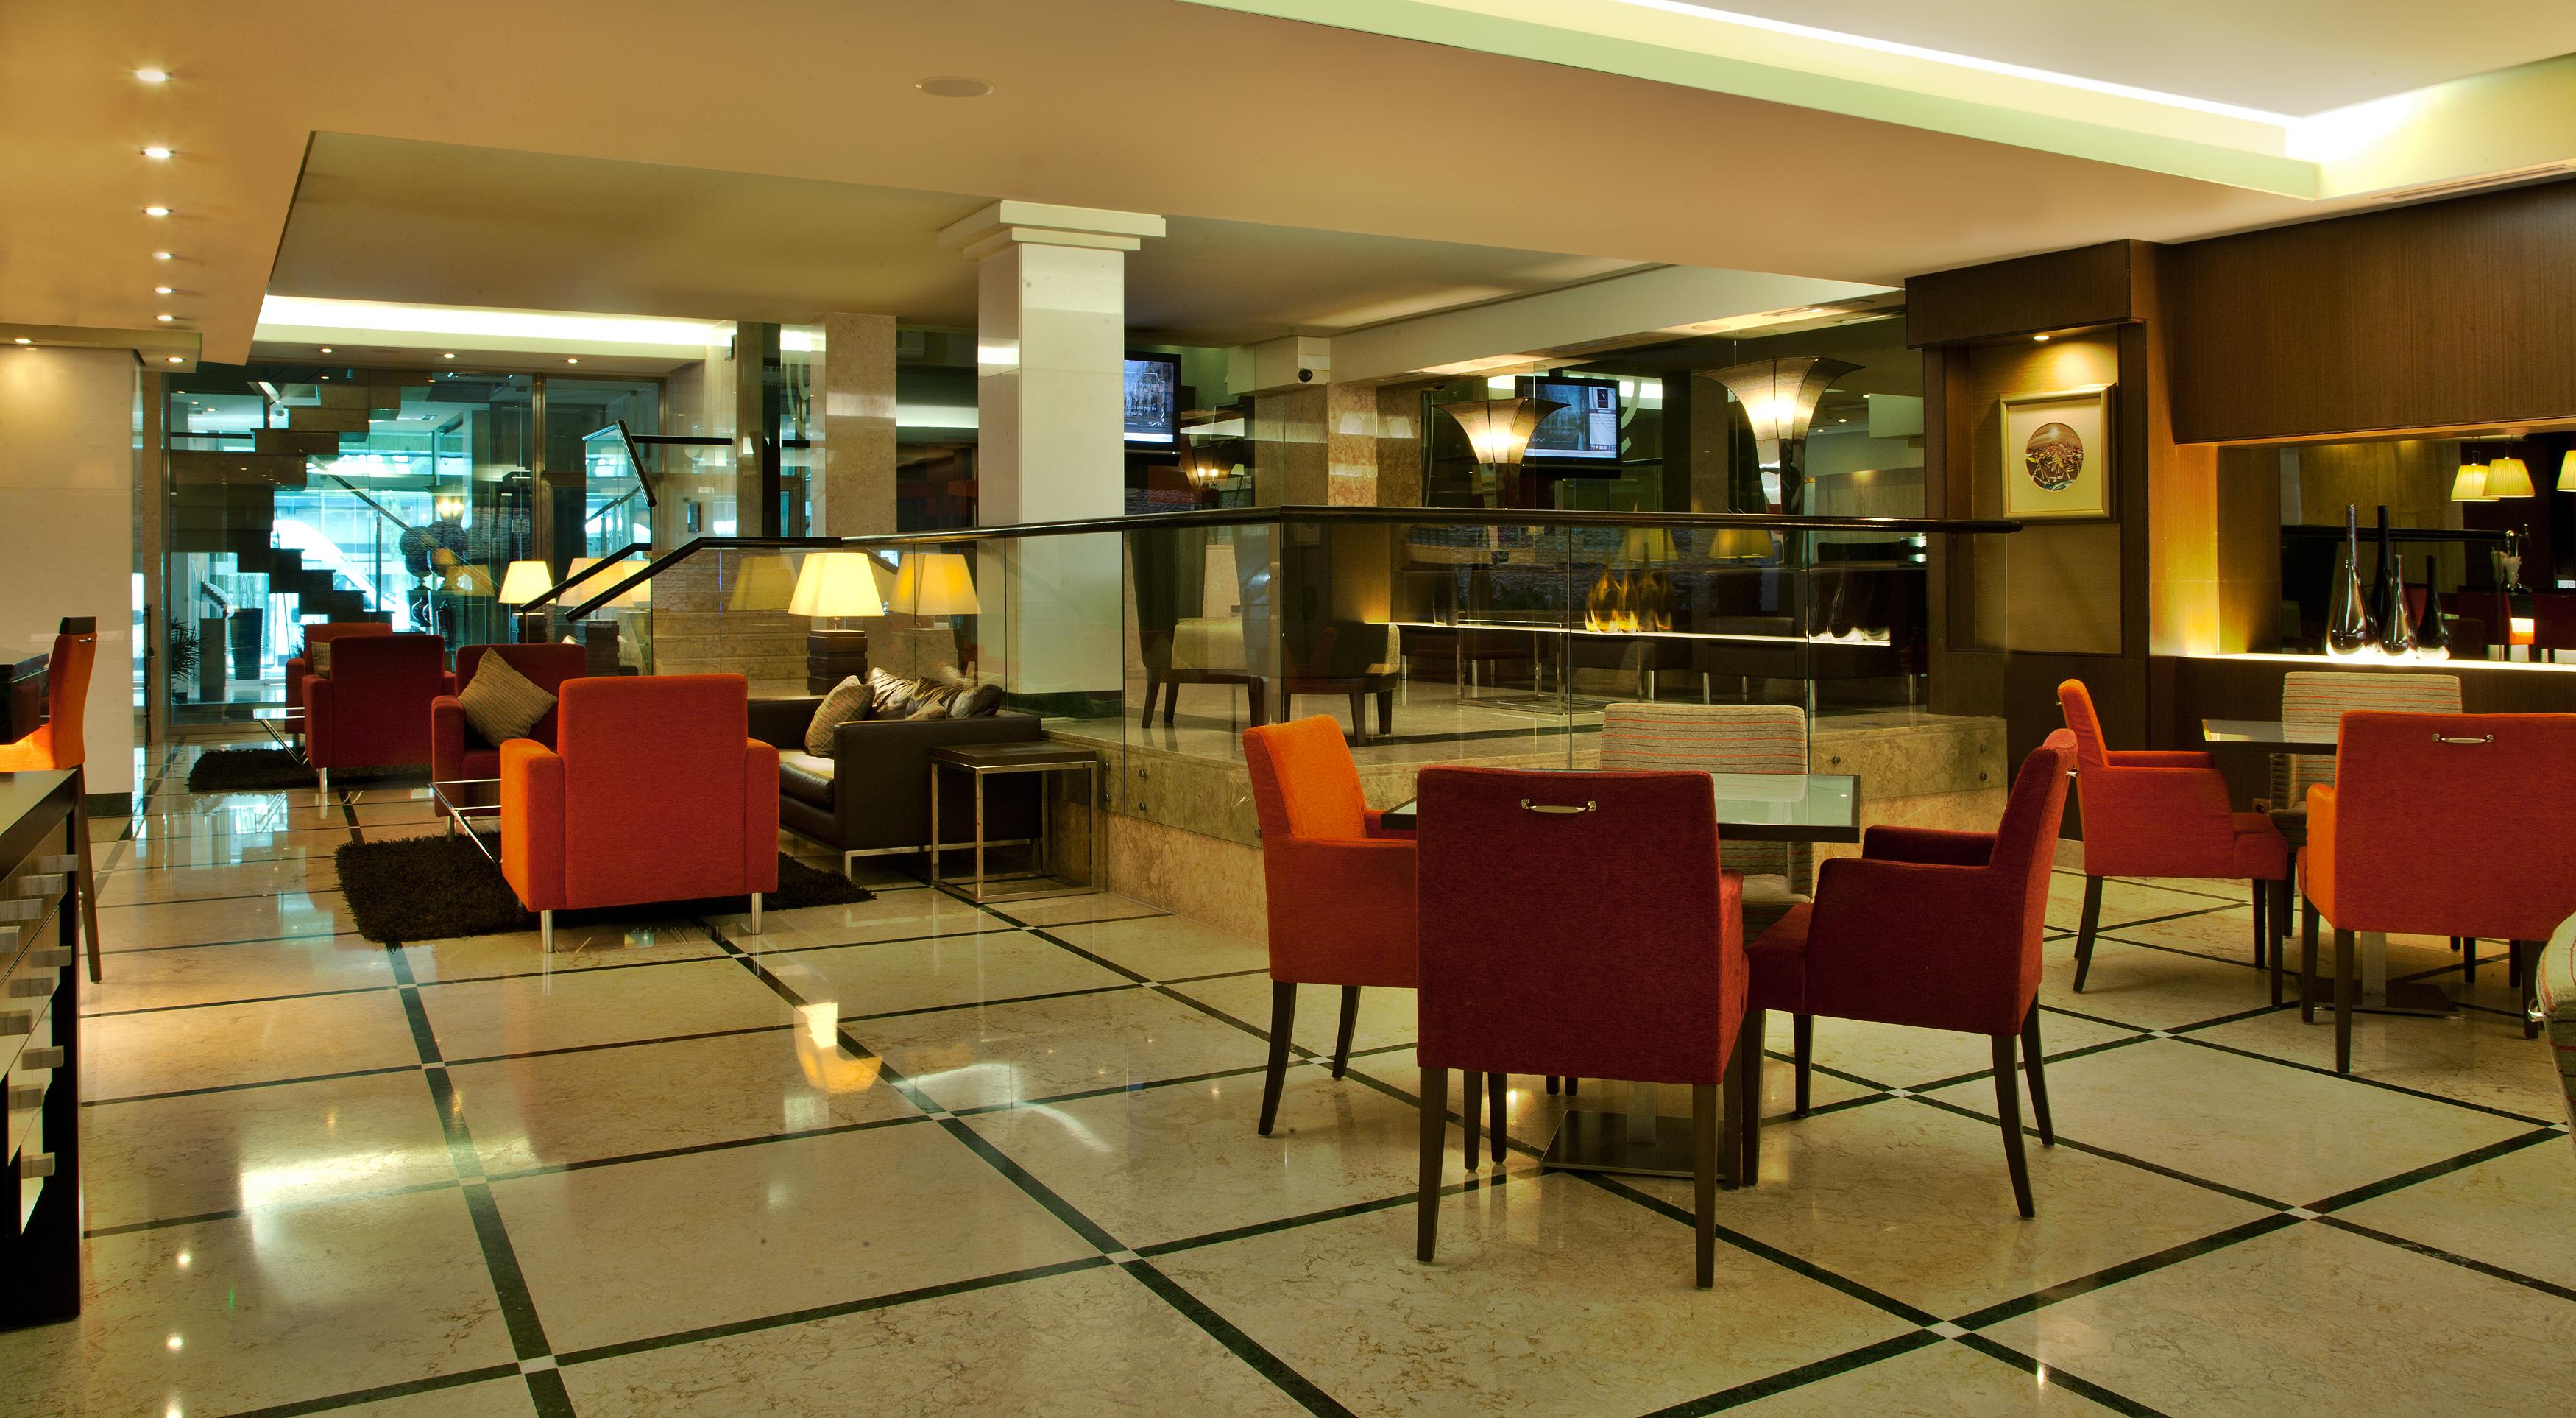 Turim Iberia Hotel Lisboa Εξωτερικό φωτογραφία